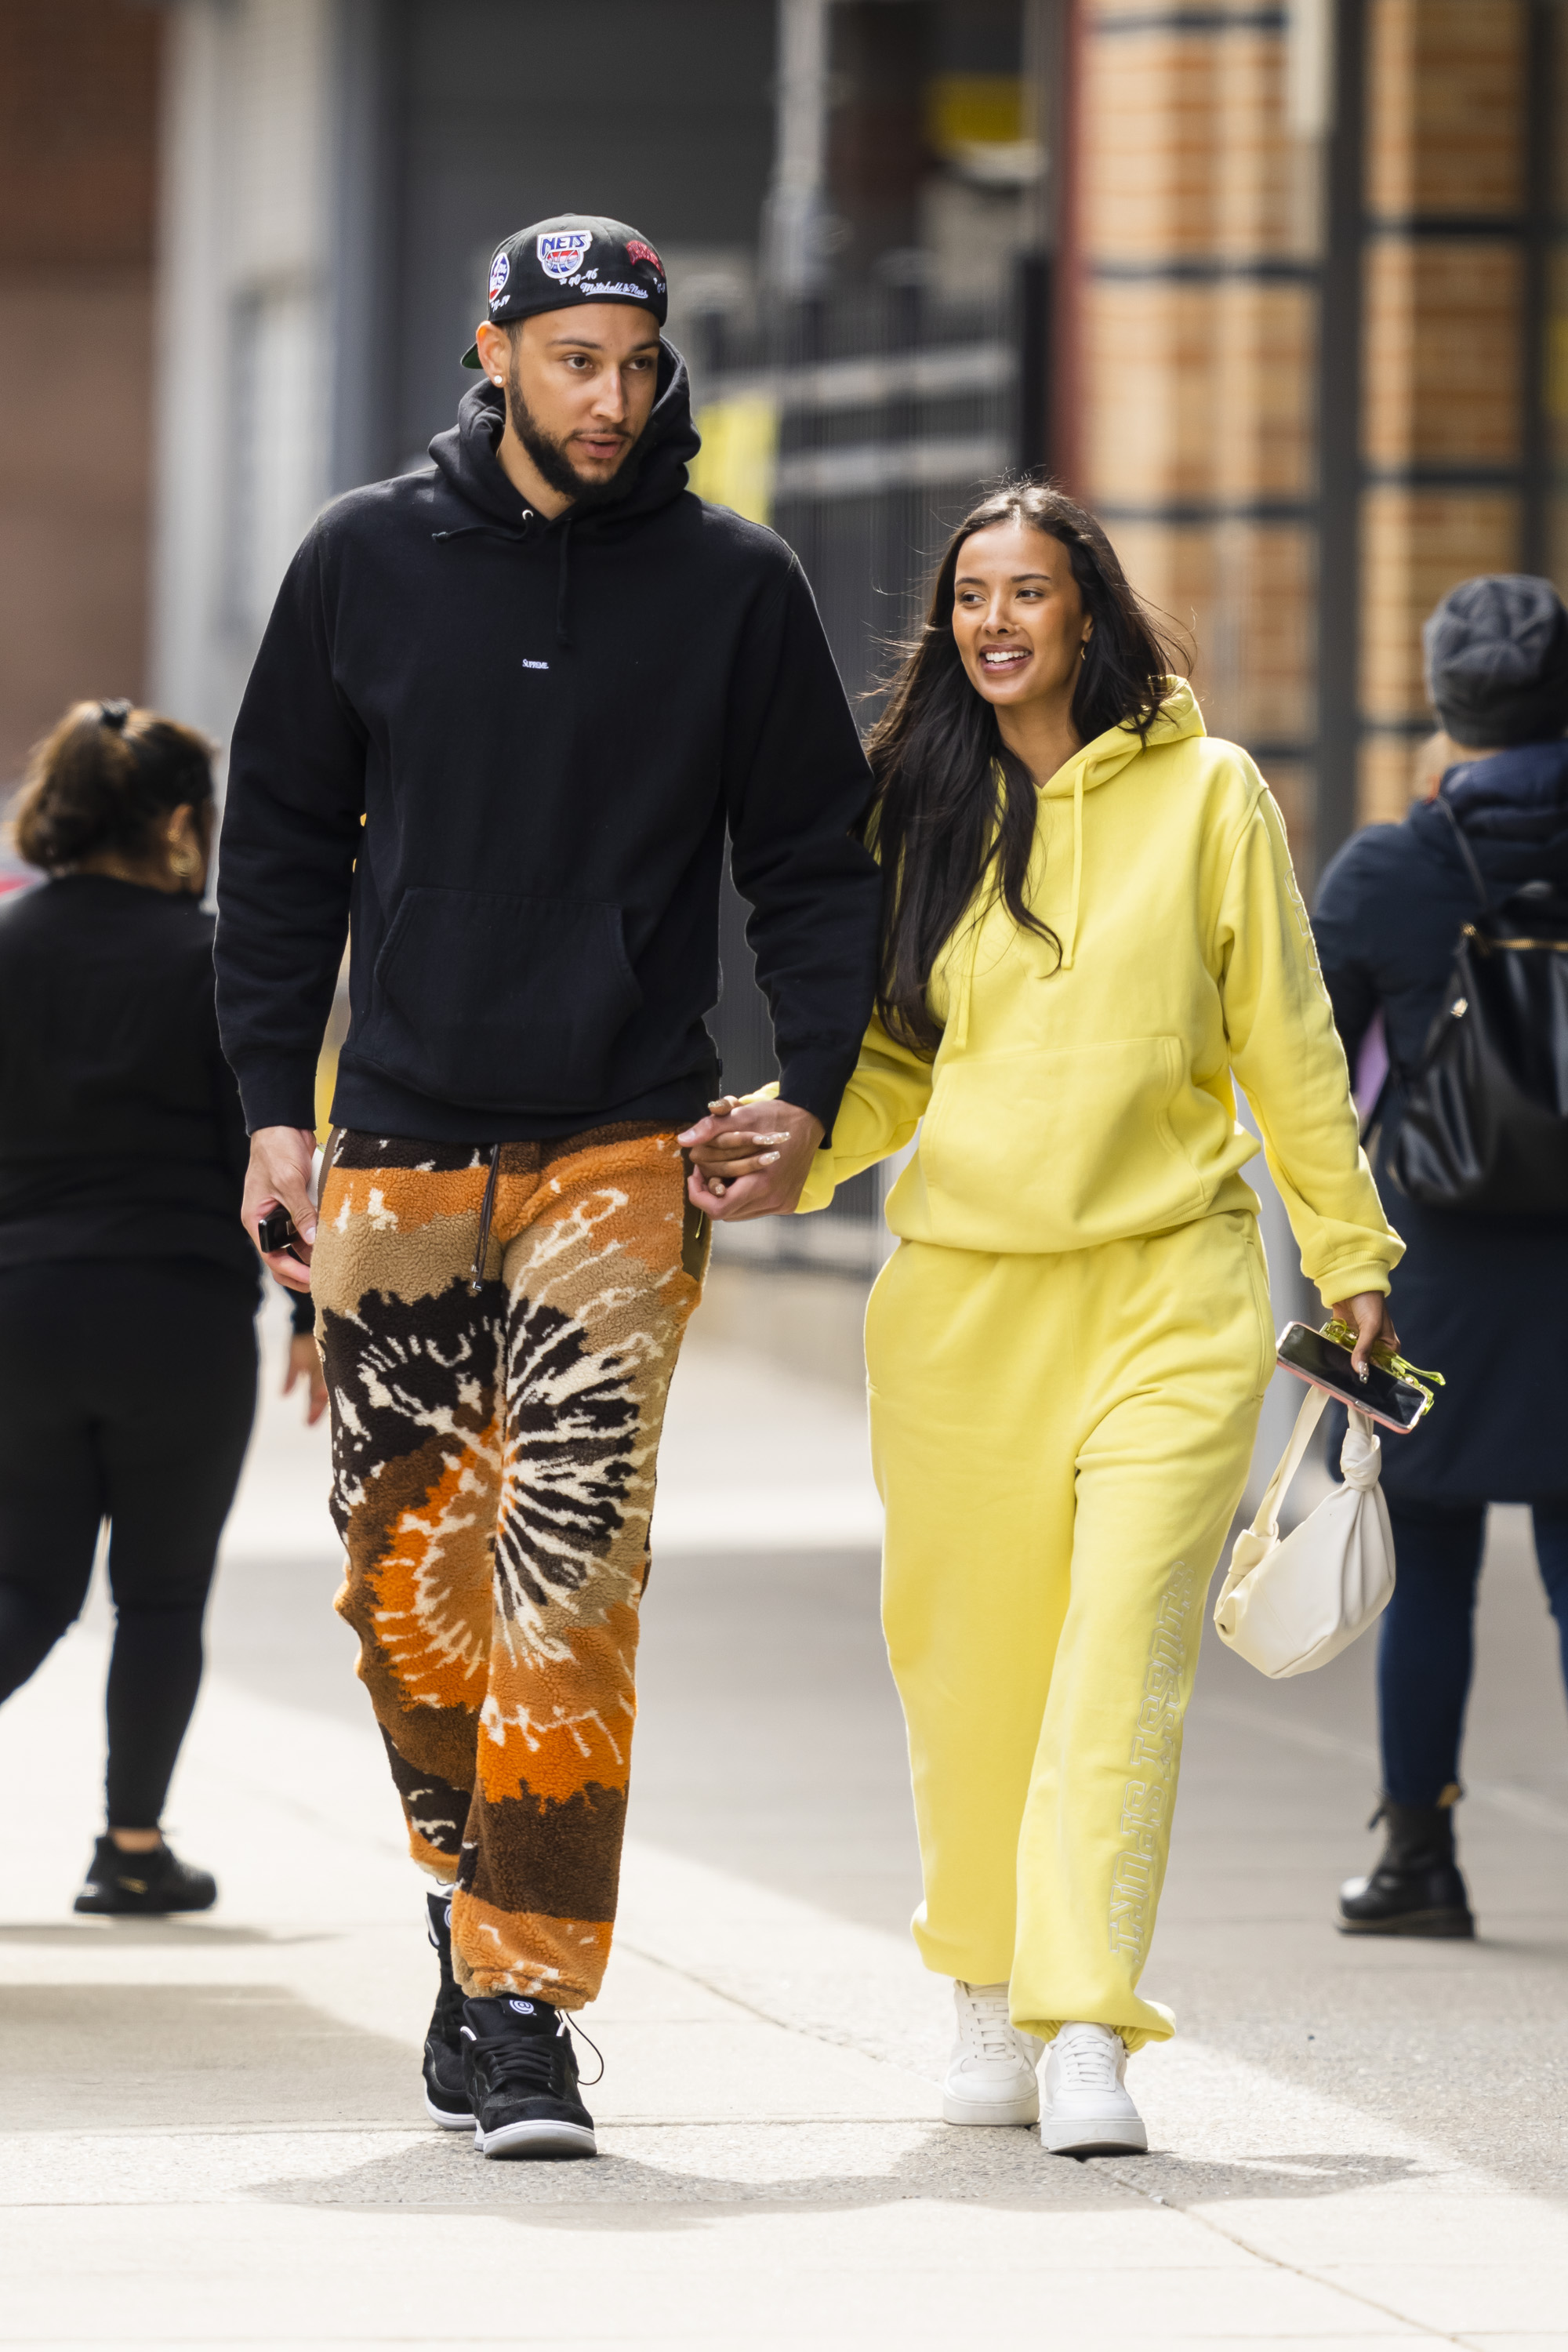 Ben Simmons and Maya Jama are seen walking hand-in-hand around Tribeca in NYC